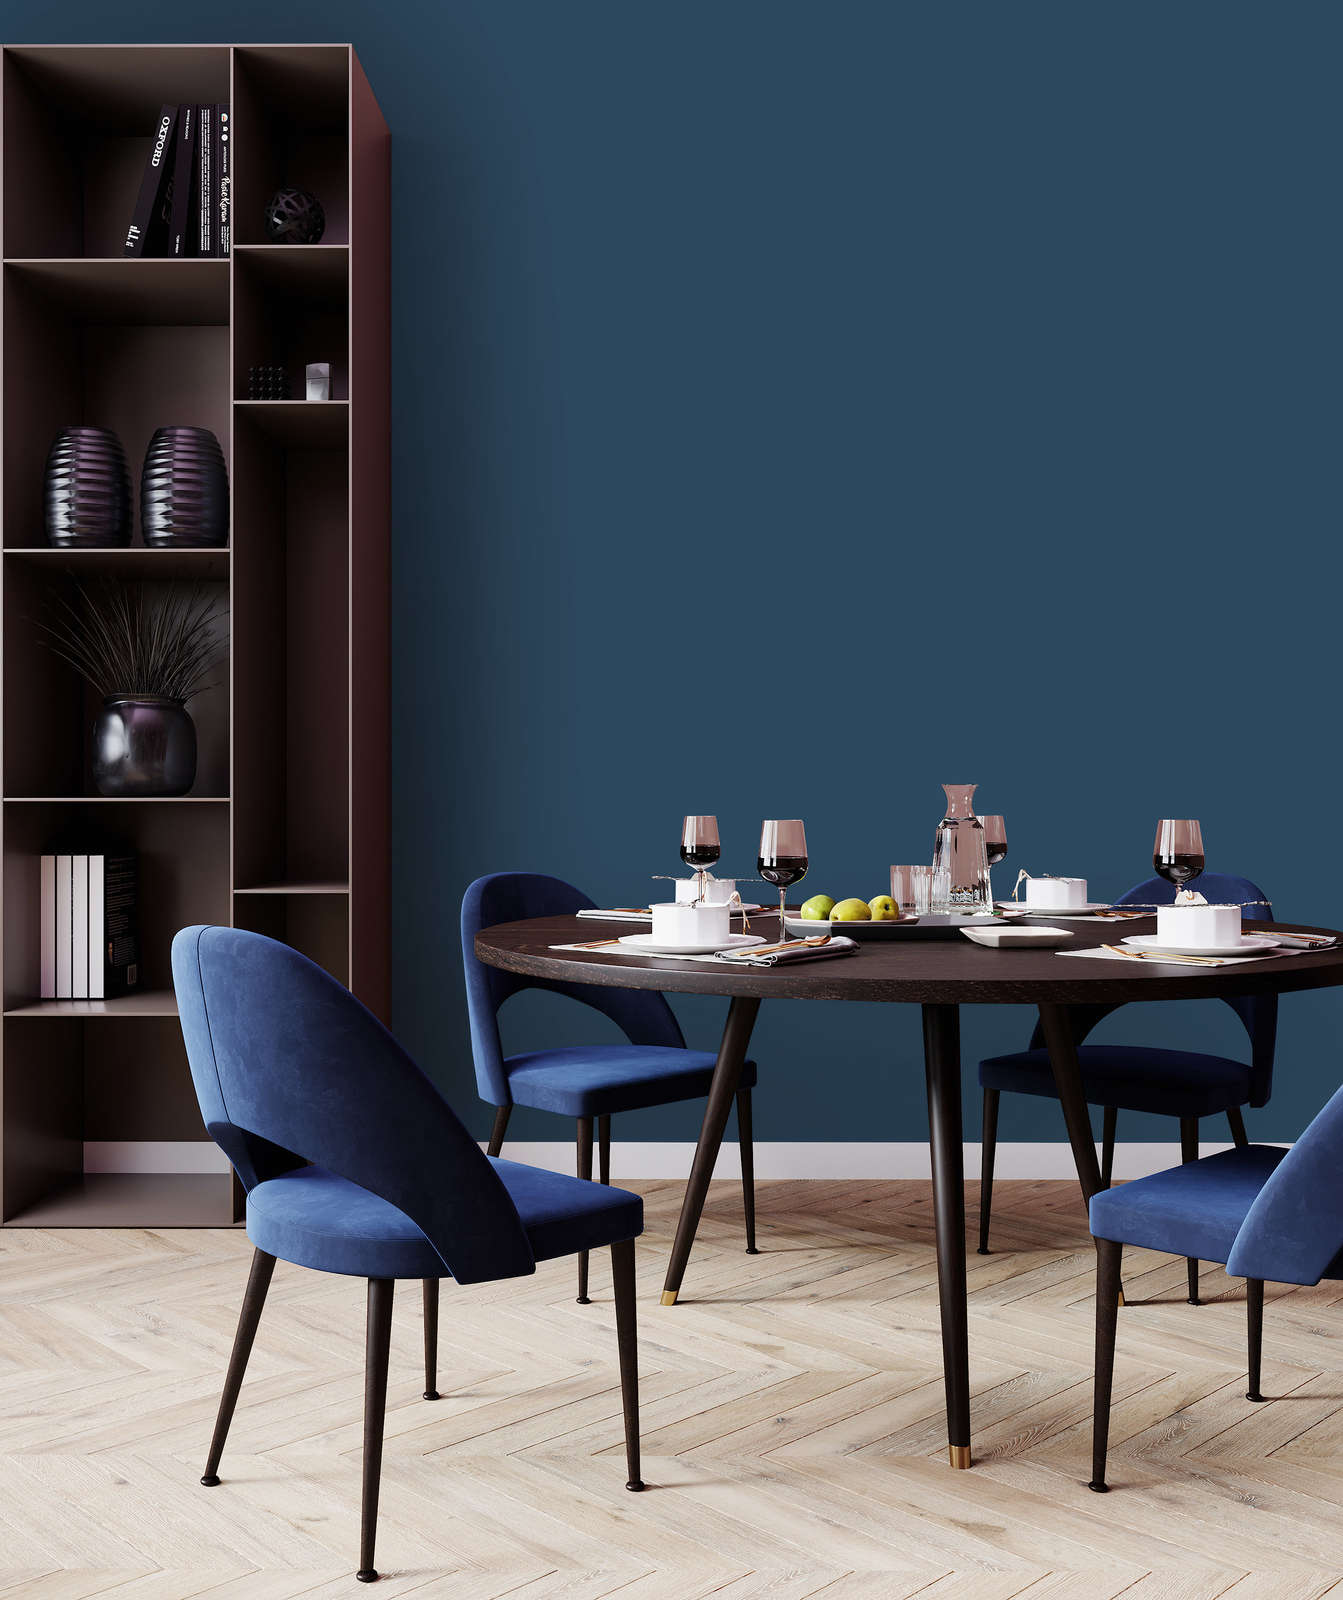             Premium Wall Paint noble dark blue »Blissful Blue« NW308 – 5 litre
        